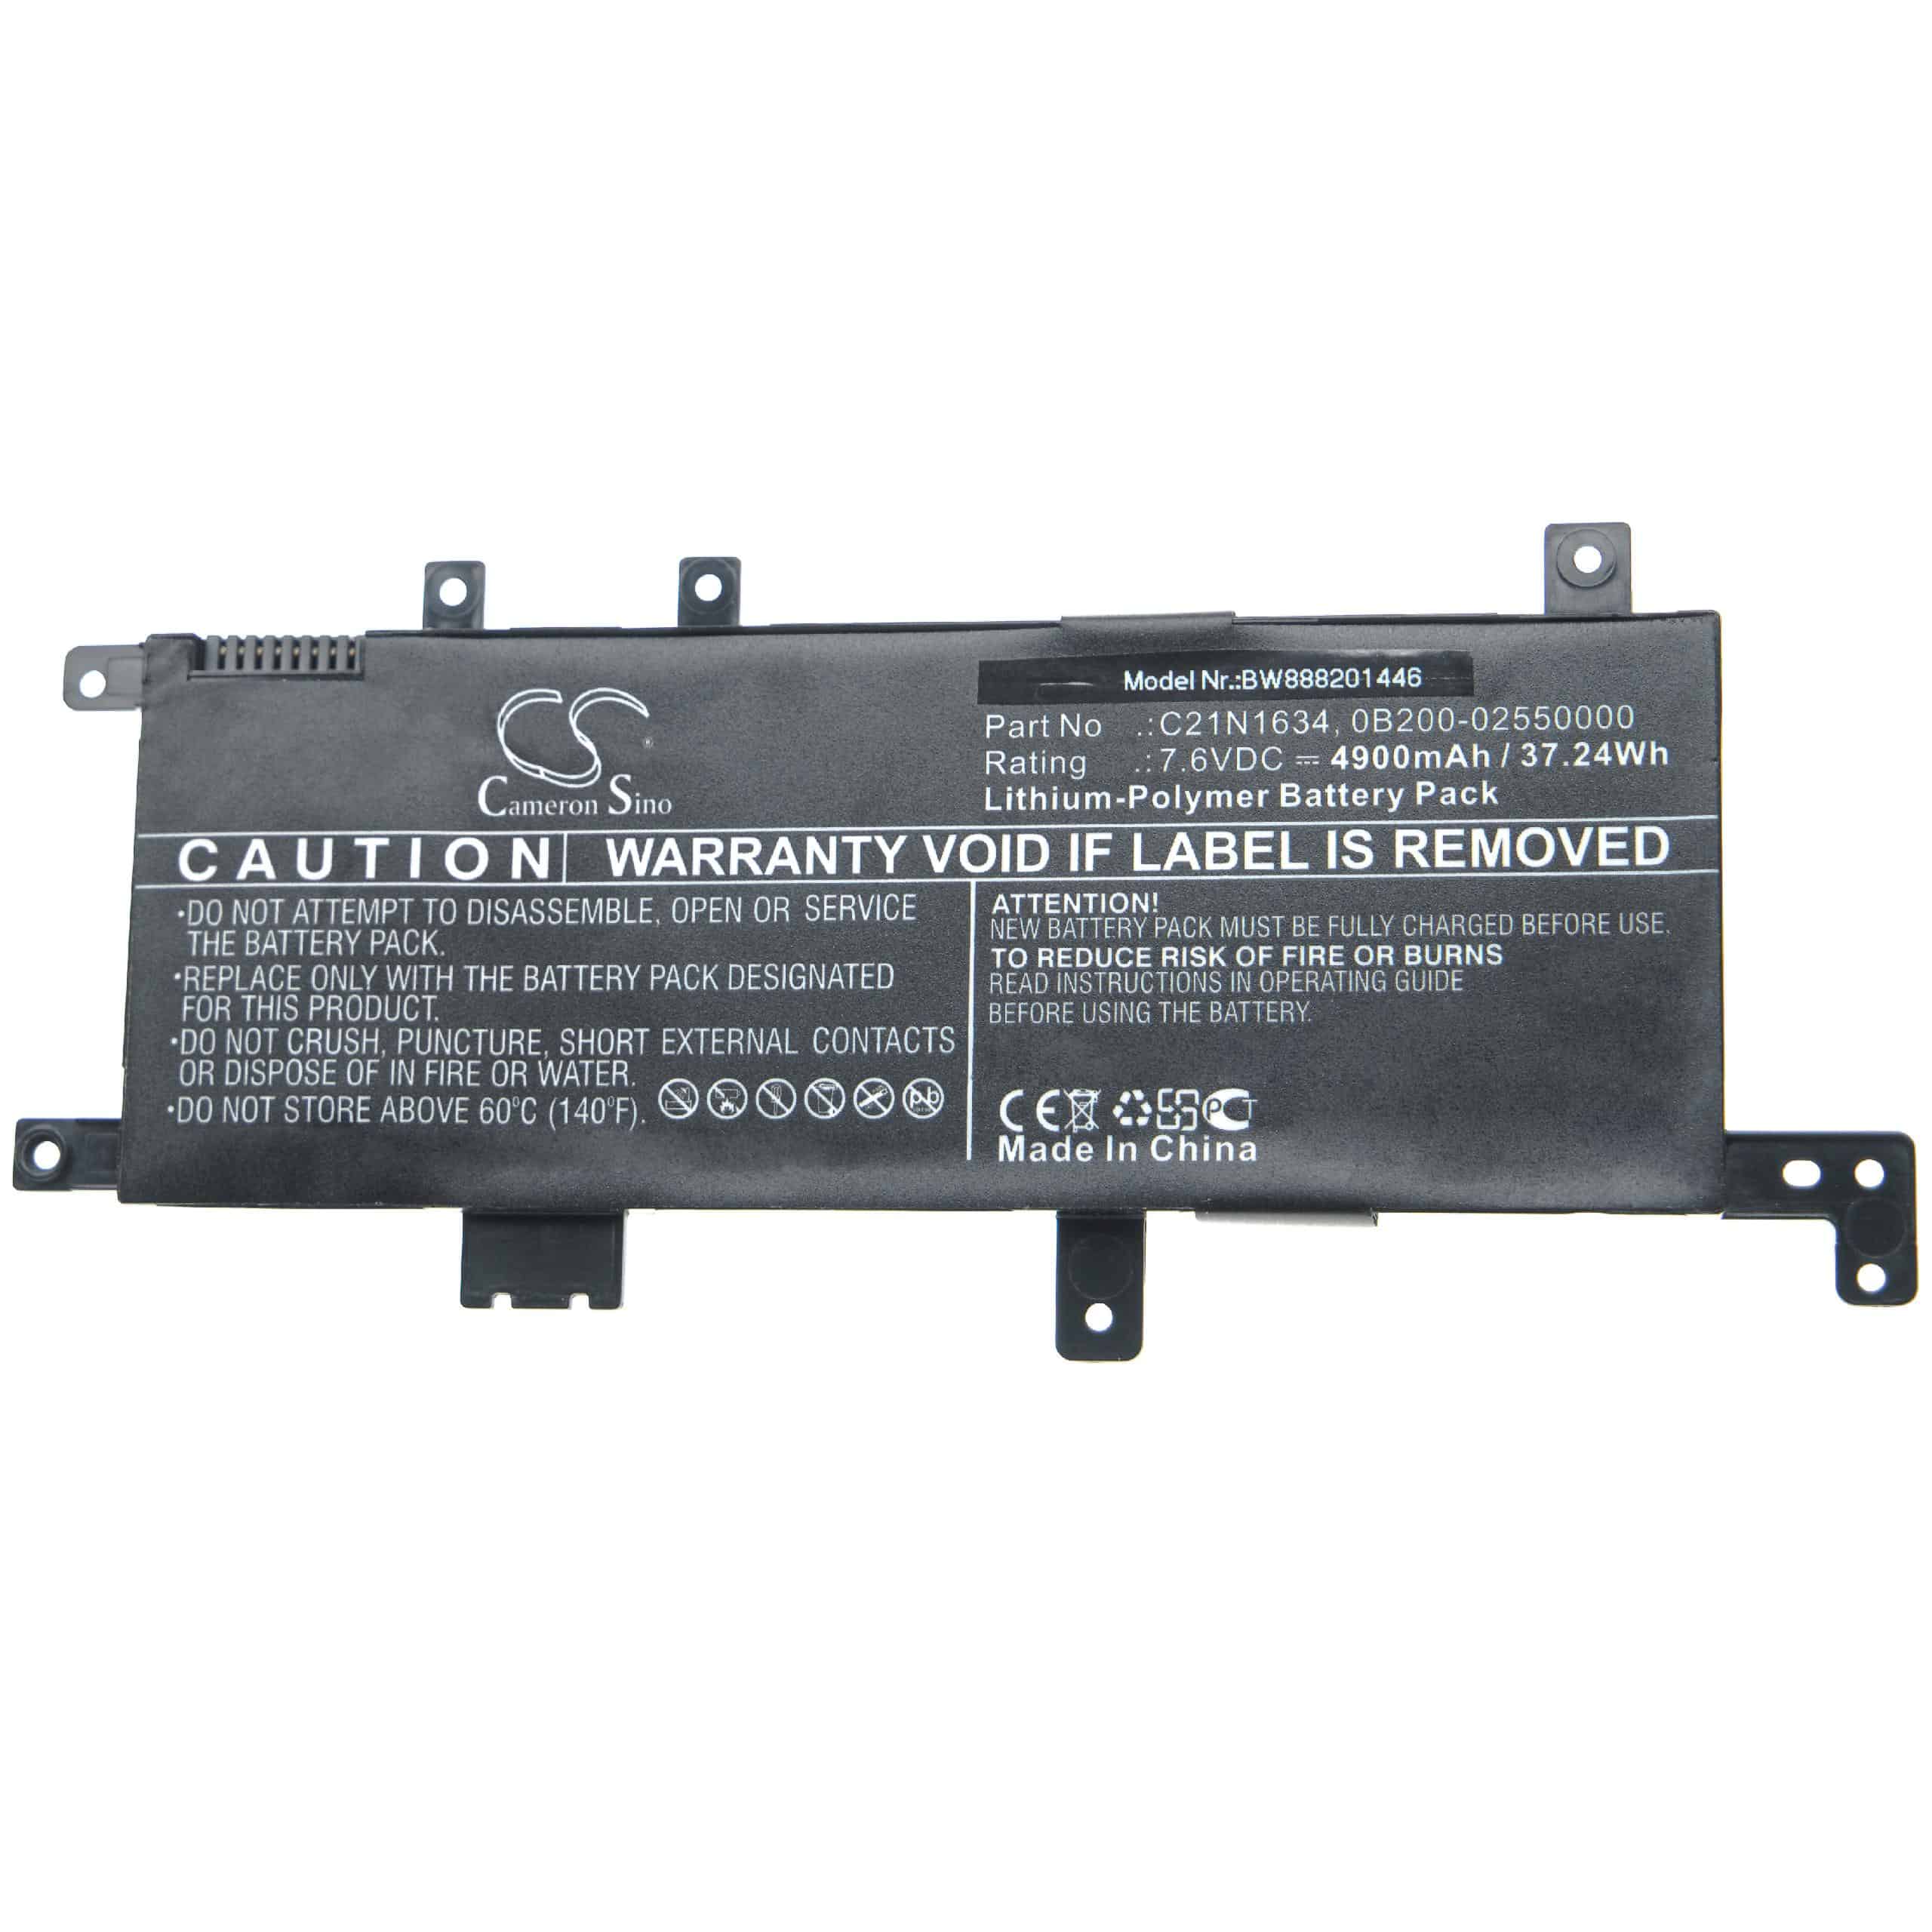 Akumulator do laptopa zamiennik Asus 0B200-02550200, C21N1634, 0B200-02550000 - 4900 mAh 7,6 V LiPo, czarny